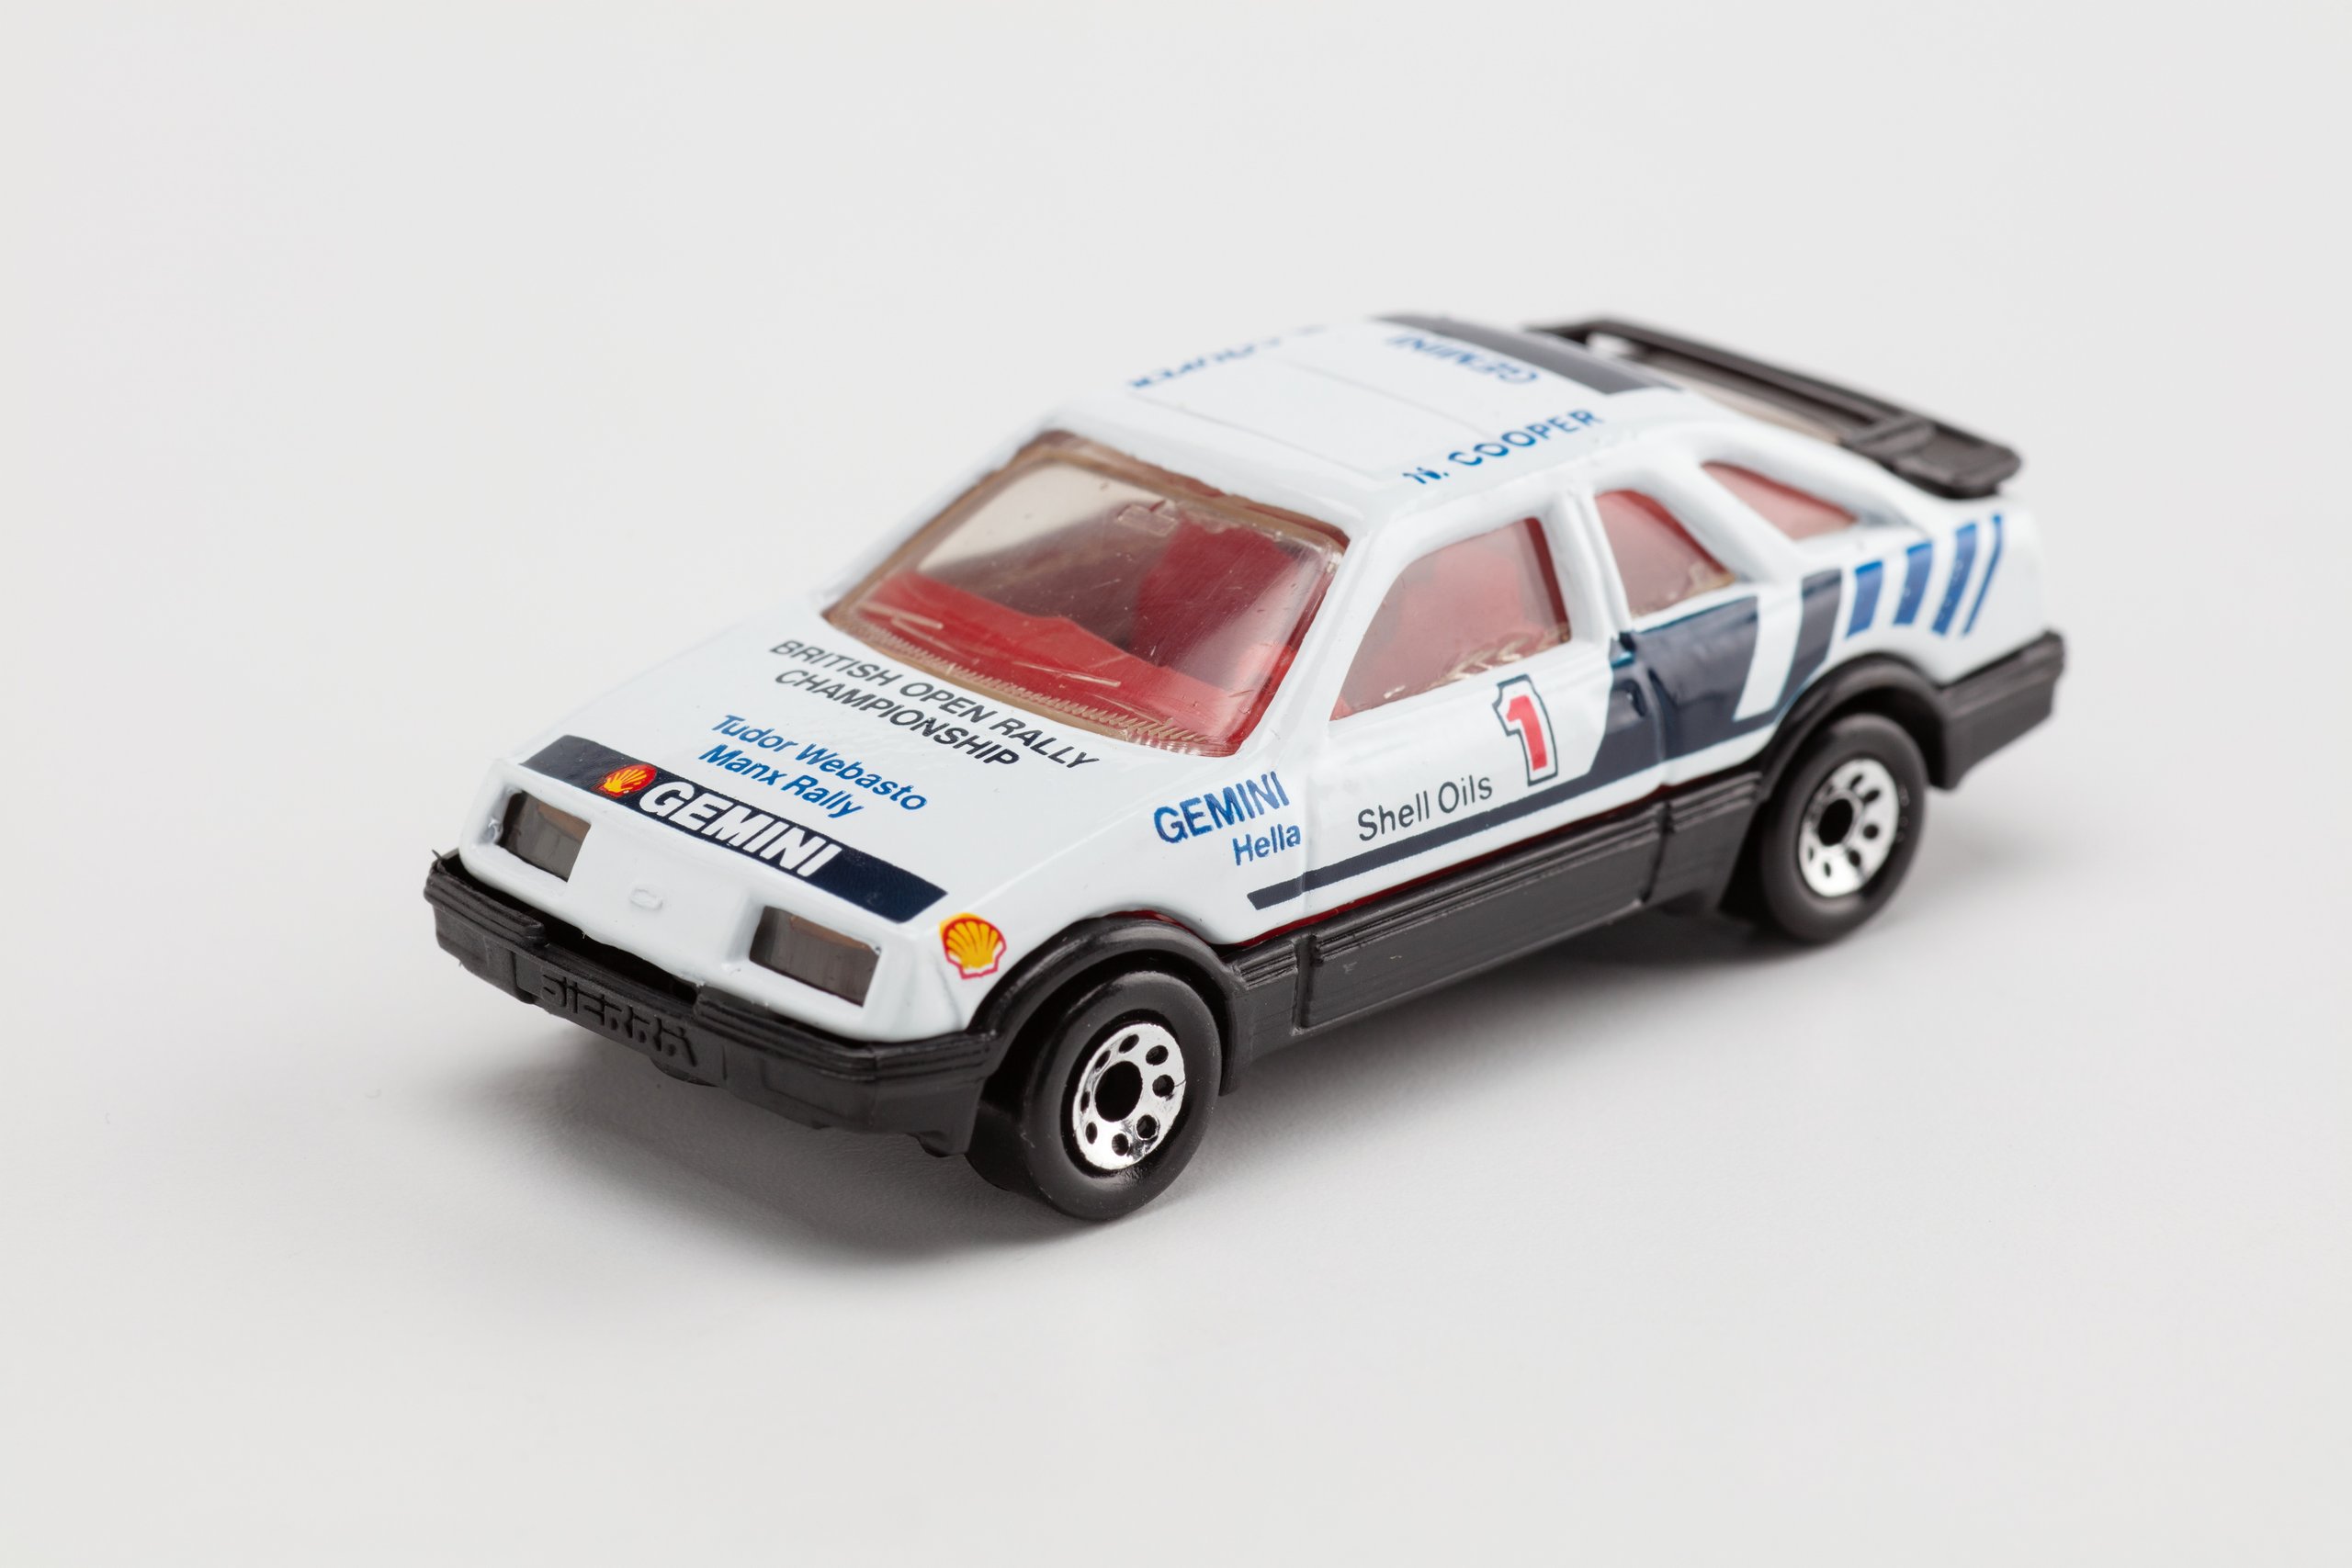 Matchbox Ford Sierra XR4i toy racing car in packaging